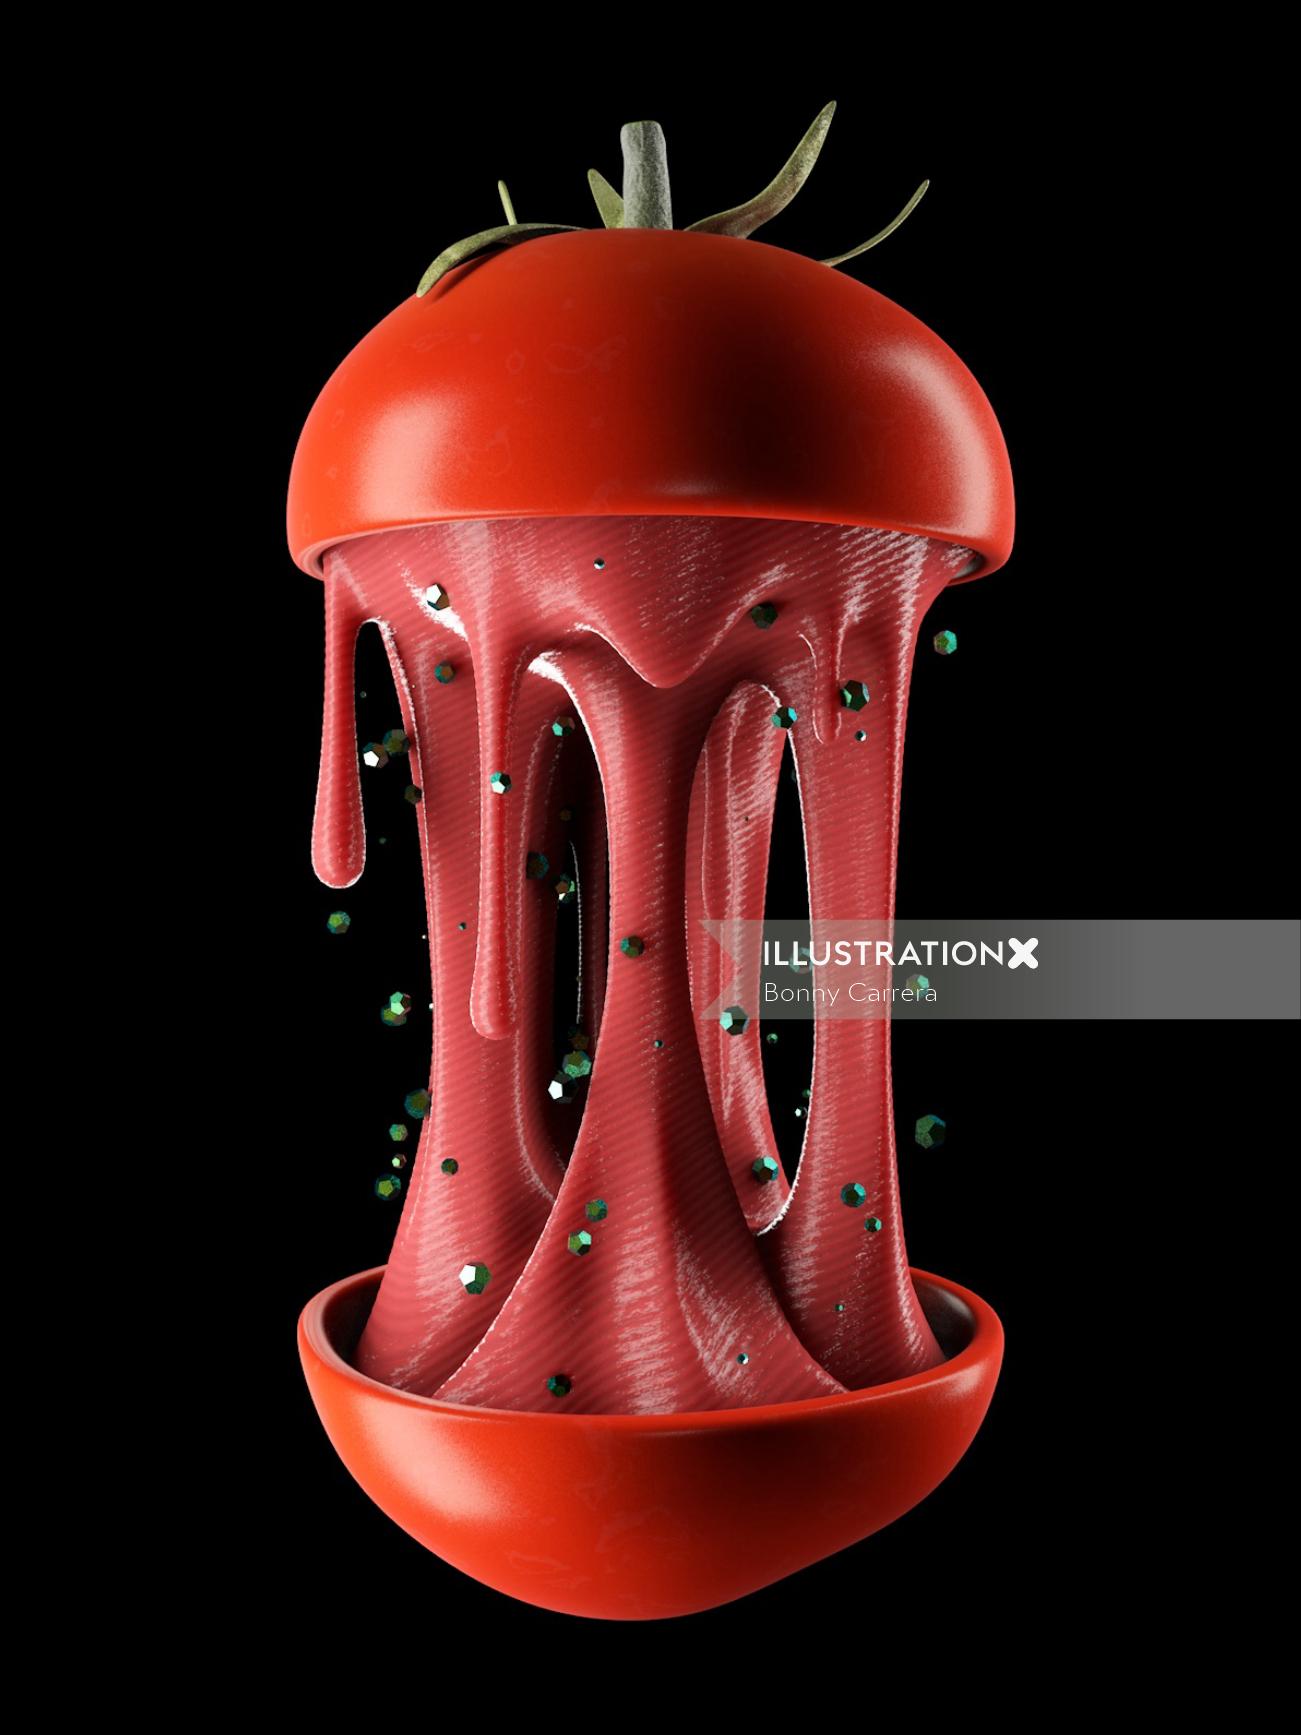 3d illustration of sliced tomato
